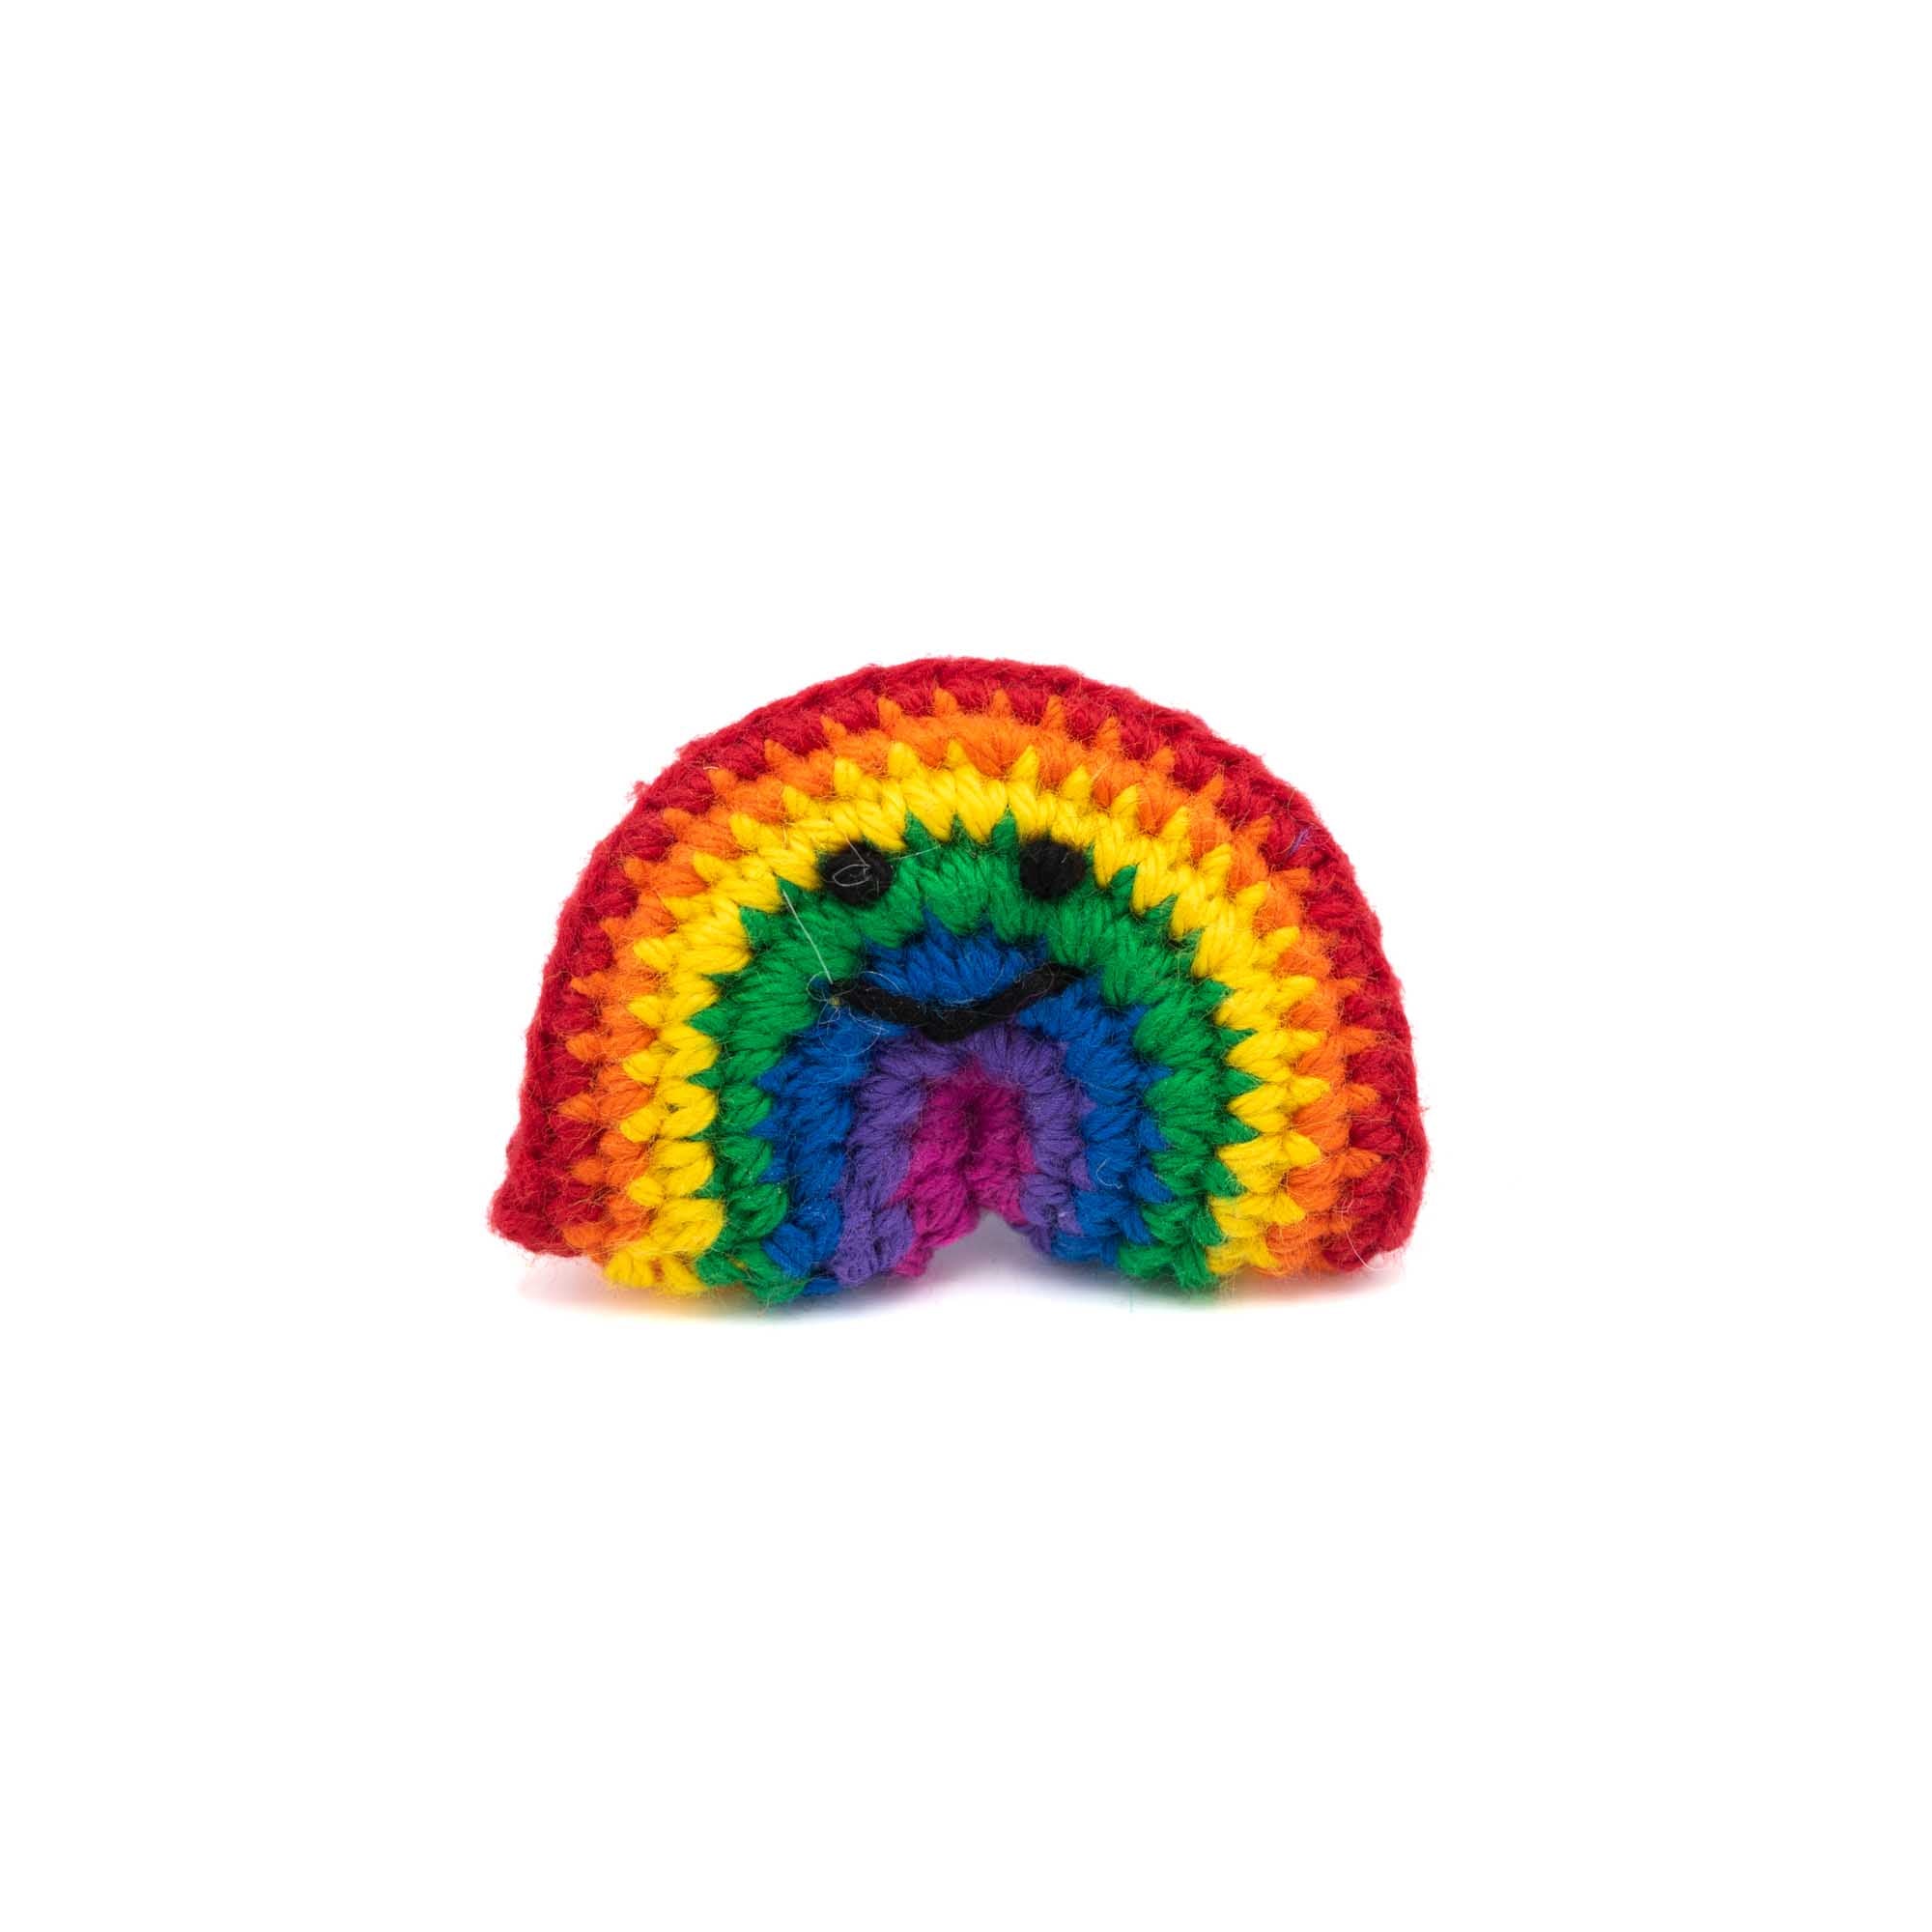 Crochet rainbow brooch with a little smiley face in black thread.